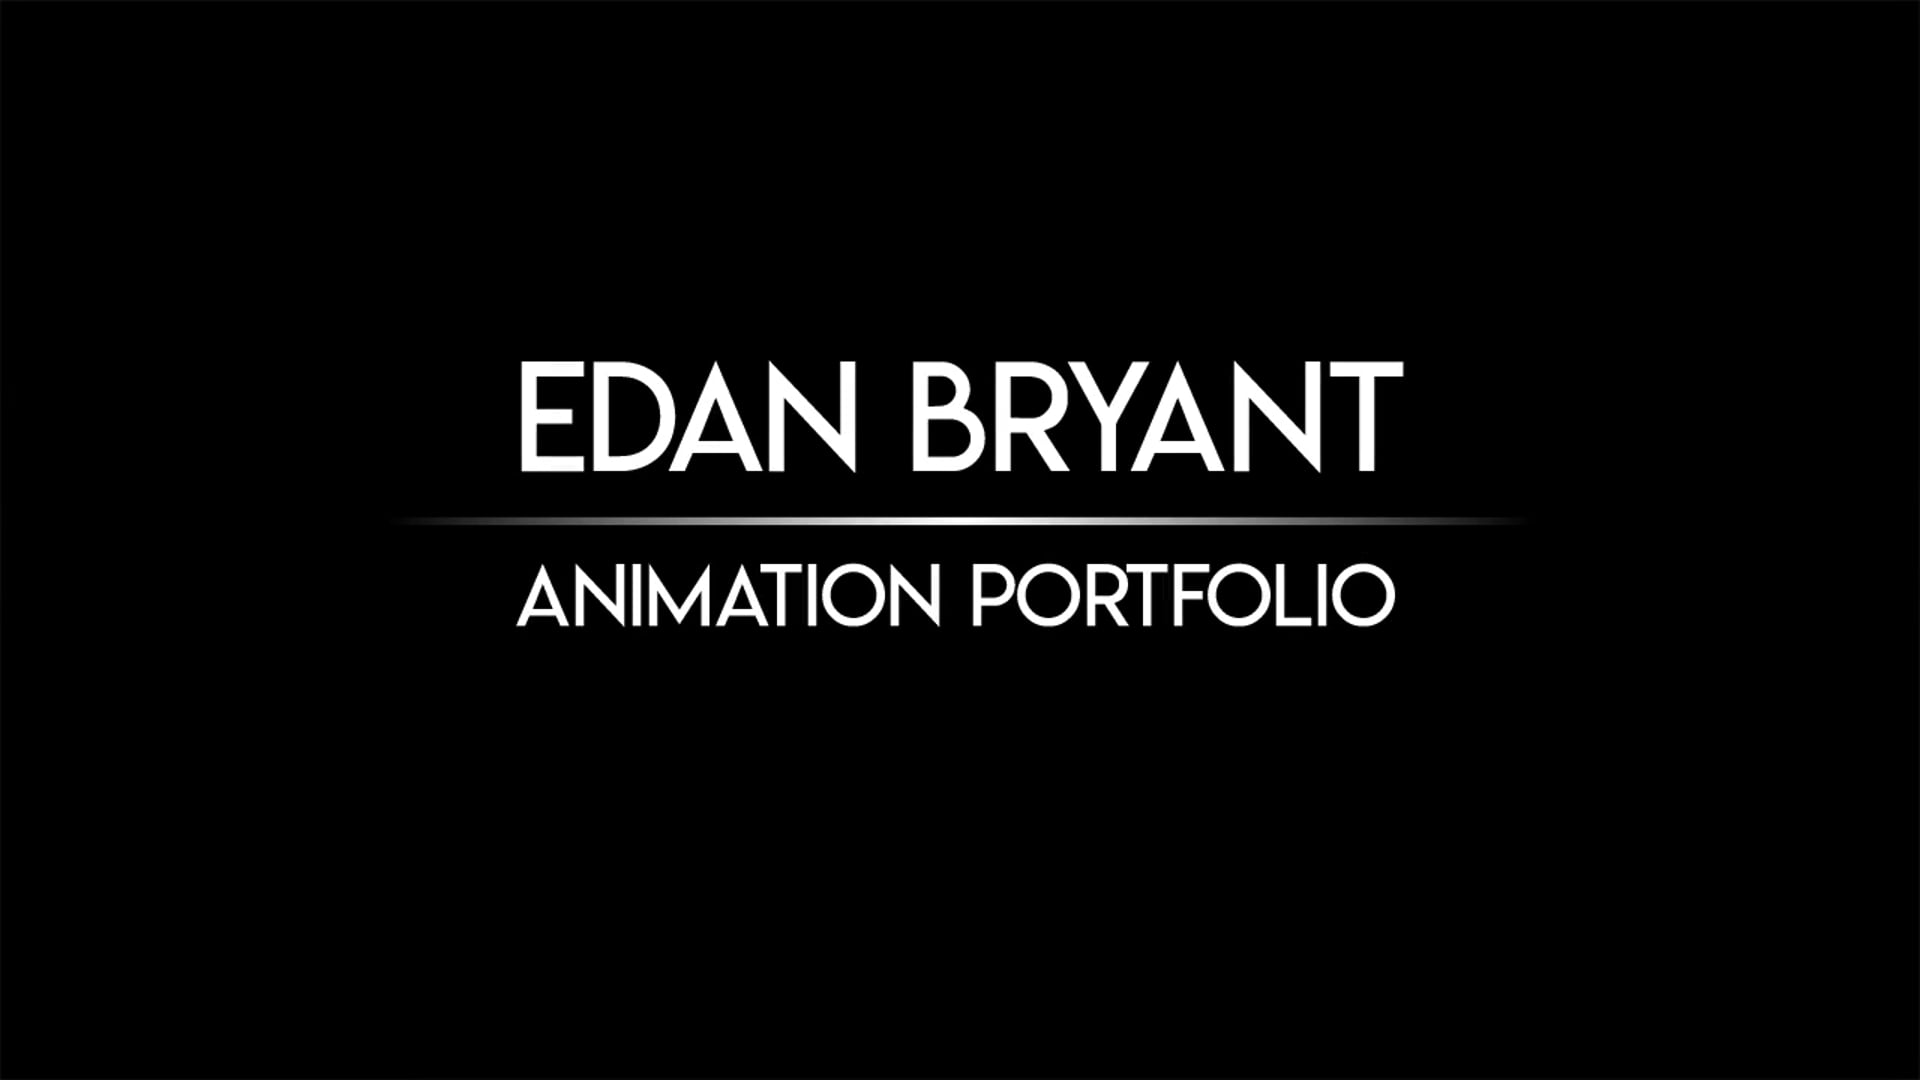 Edan Bryant - Animation Portfolio - August 2020